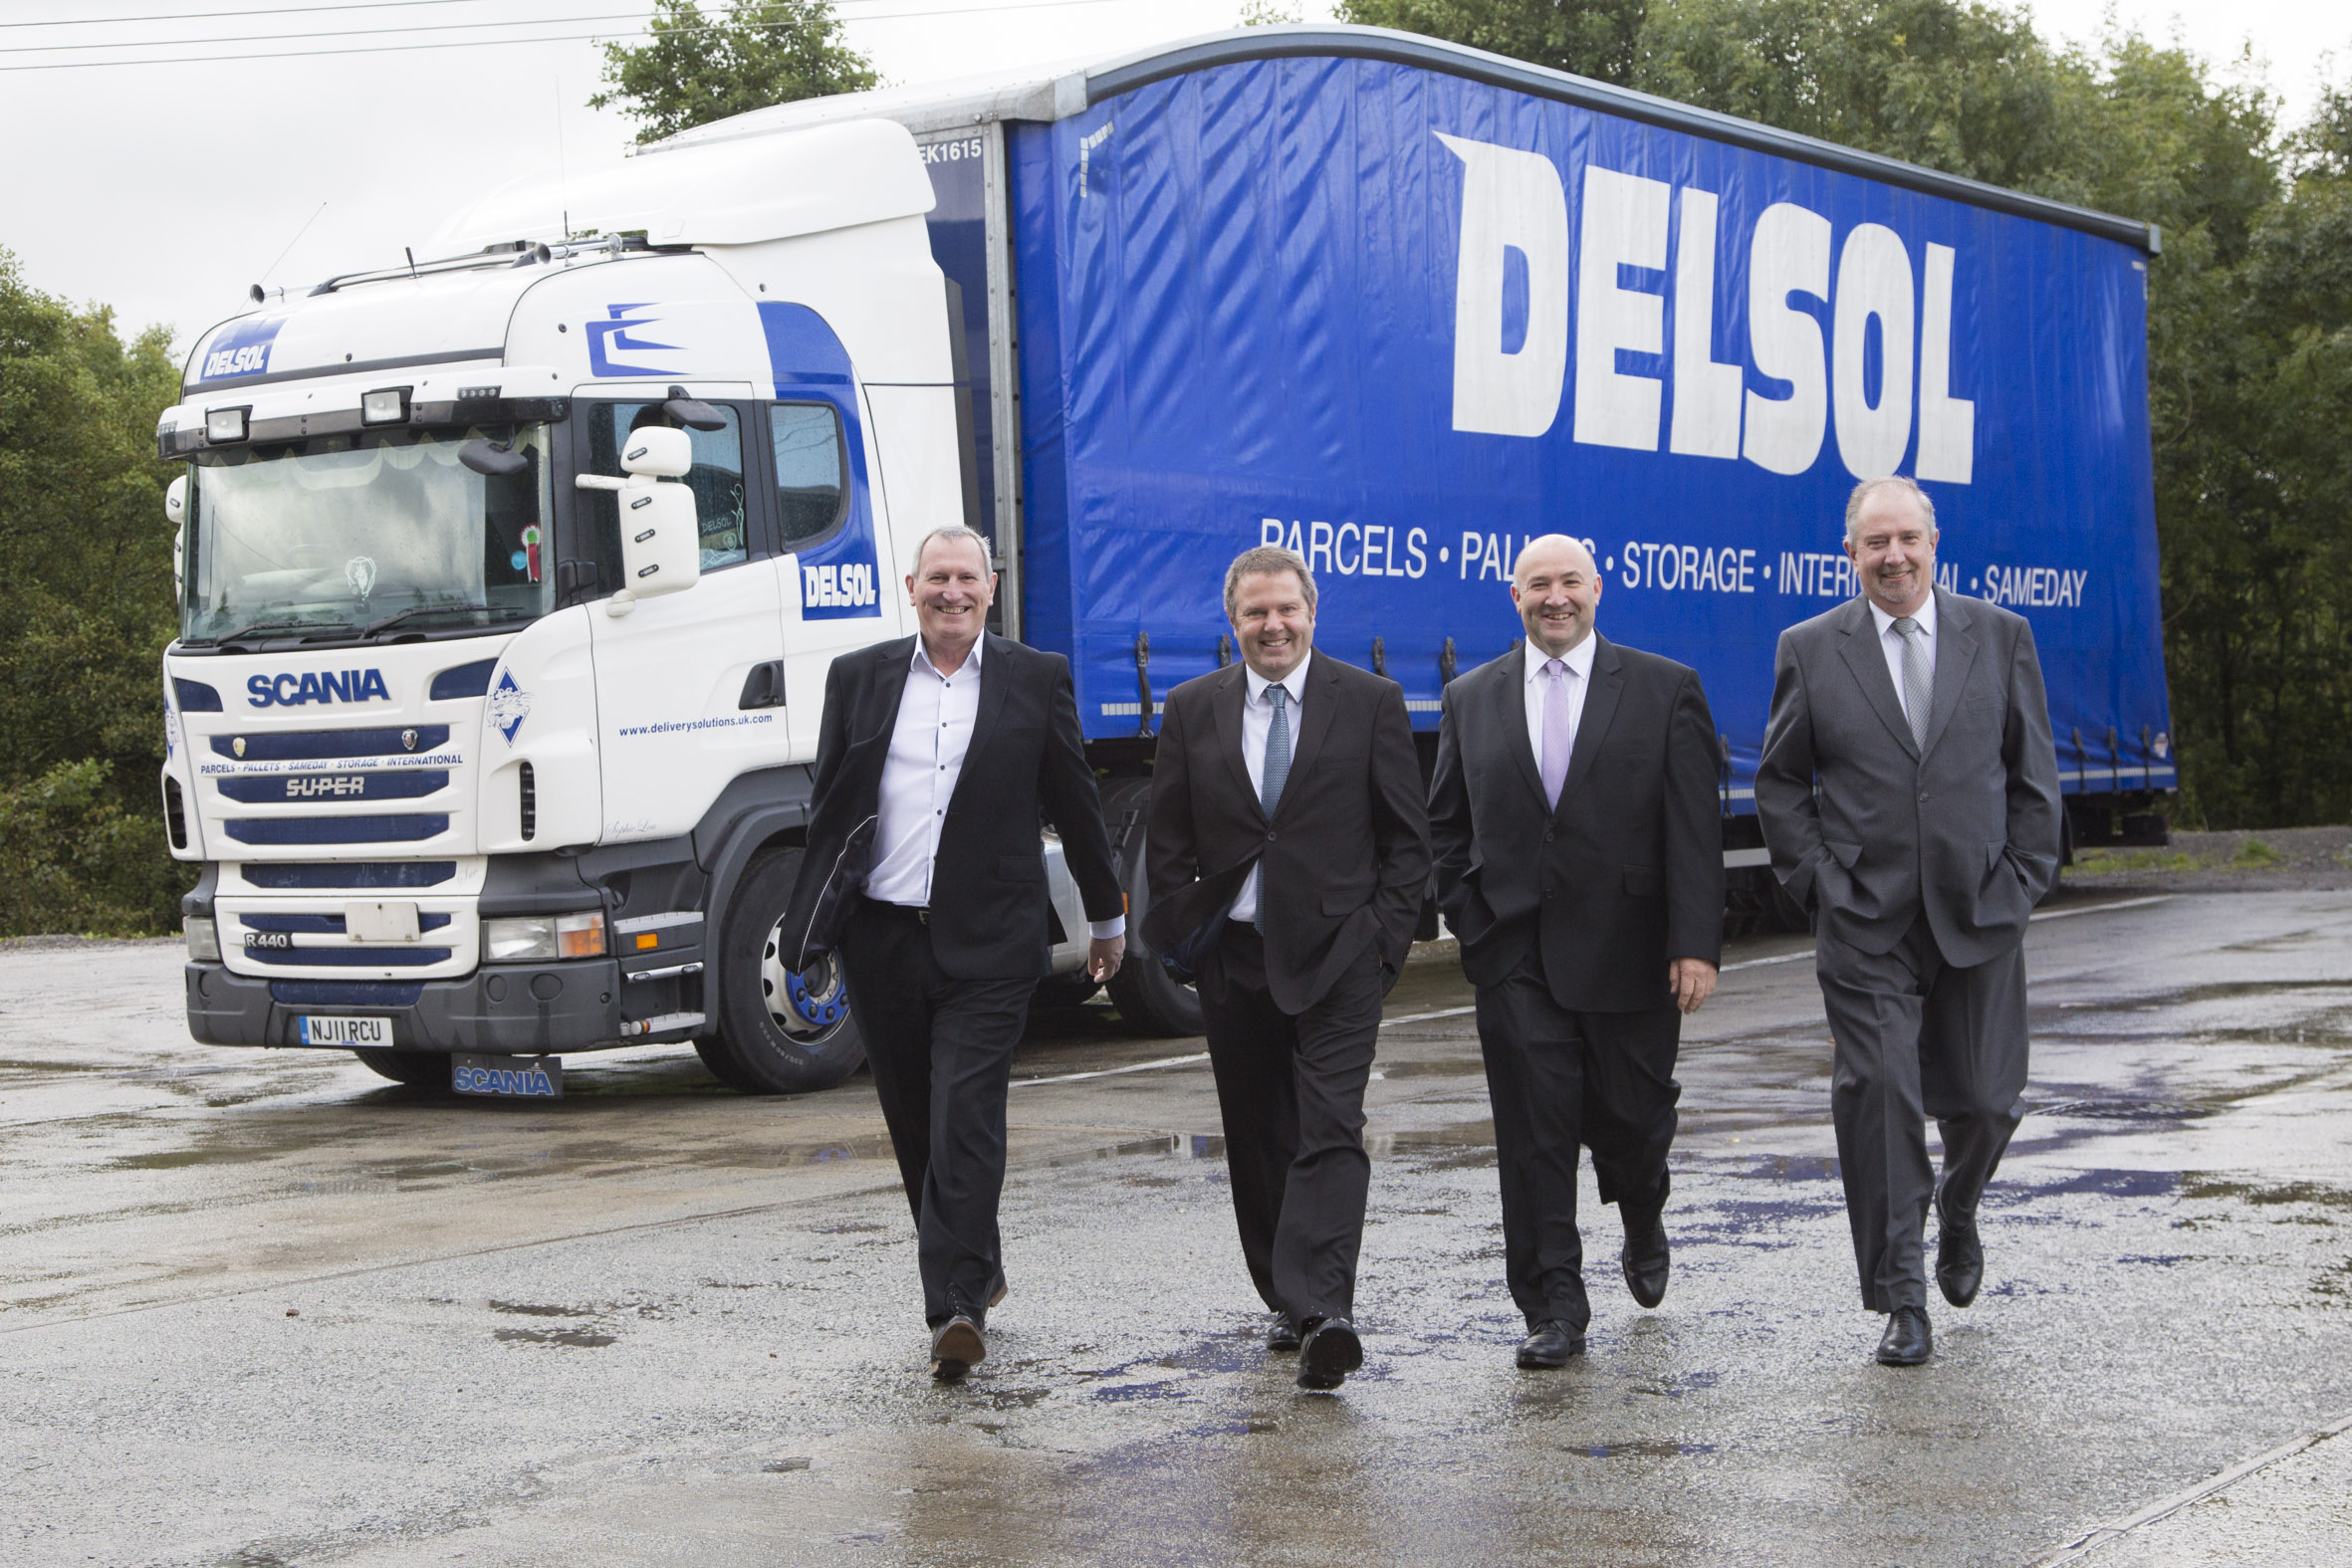 Delsol plans major expansion after strengthening executive team